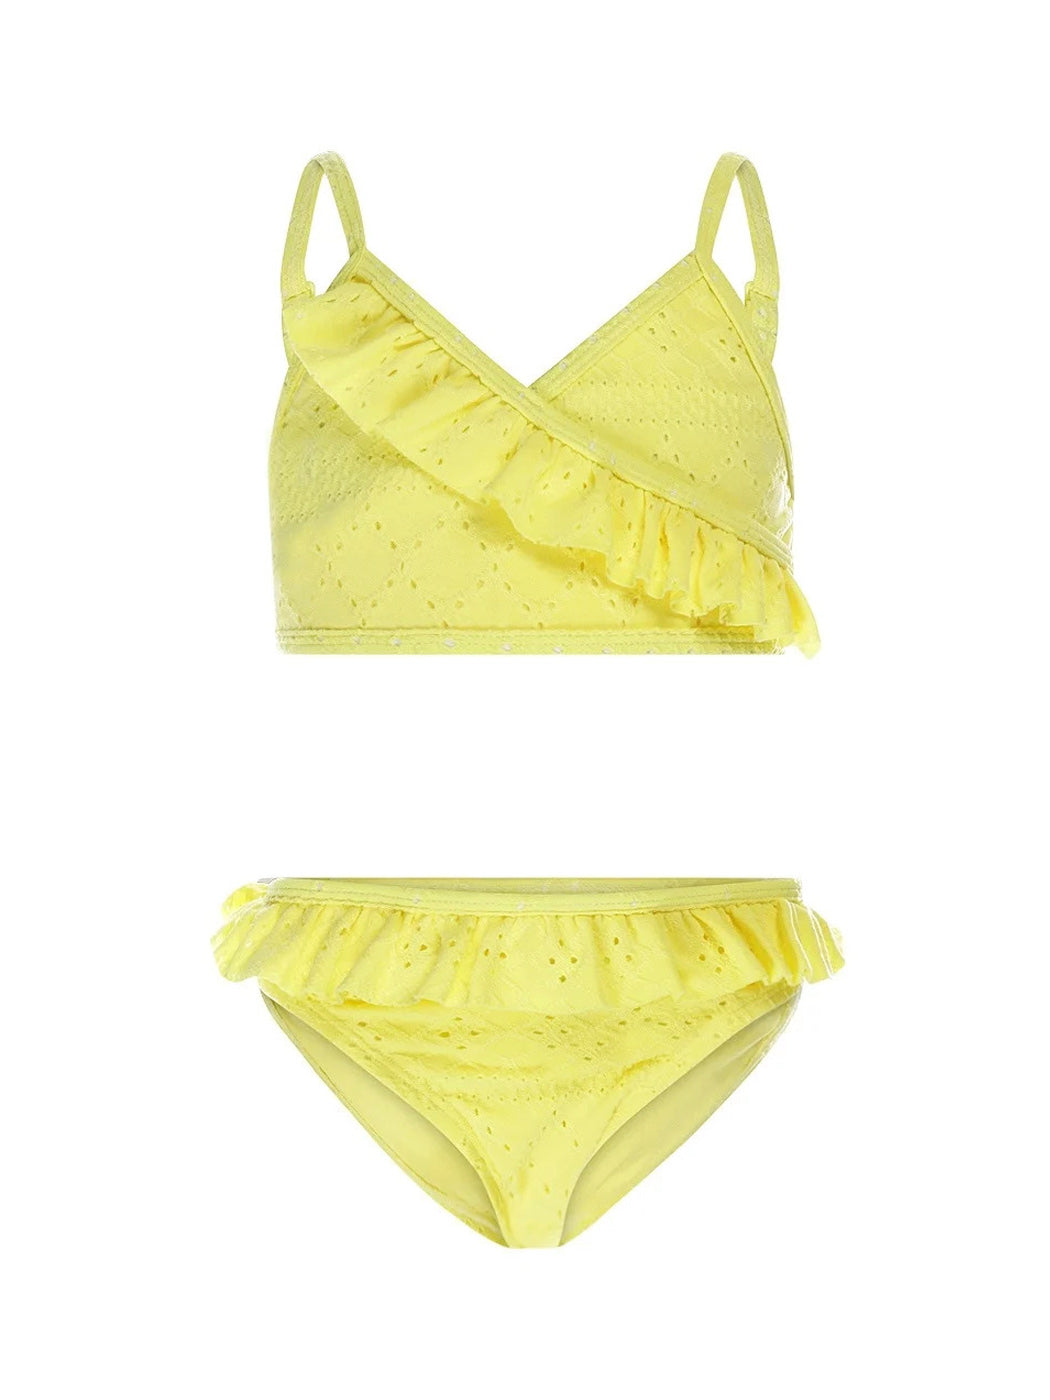 Girls swimsuit bikini with embroidery - T46927-37 Yellow